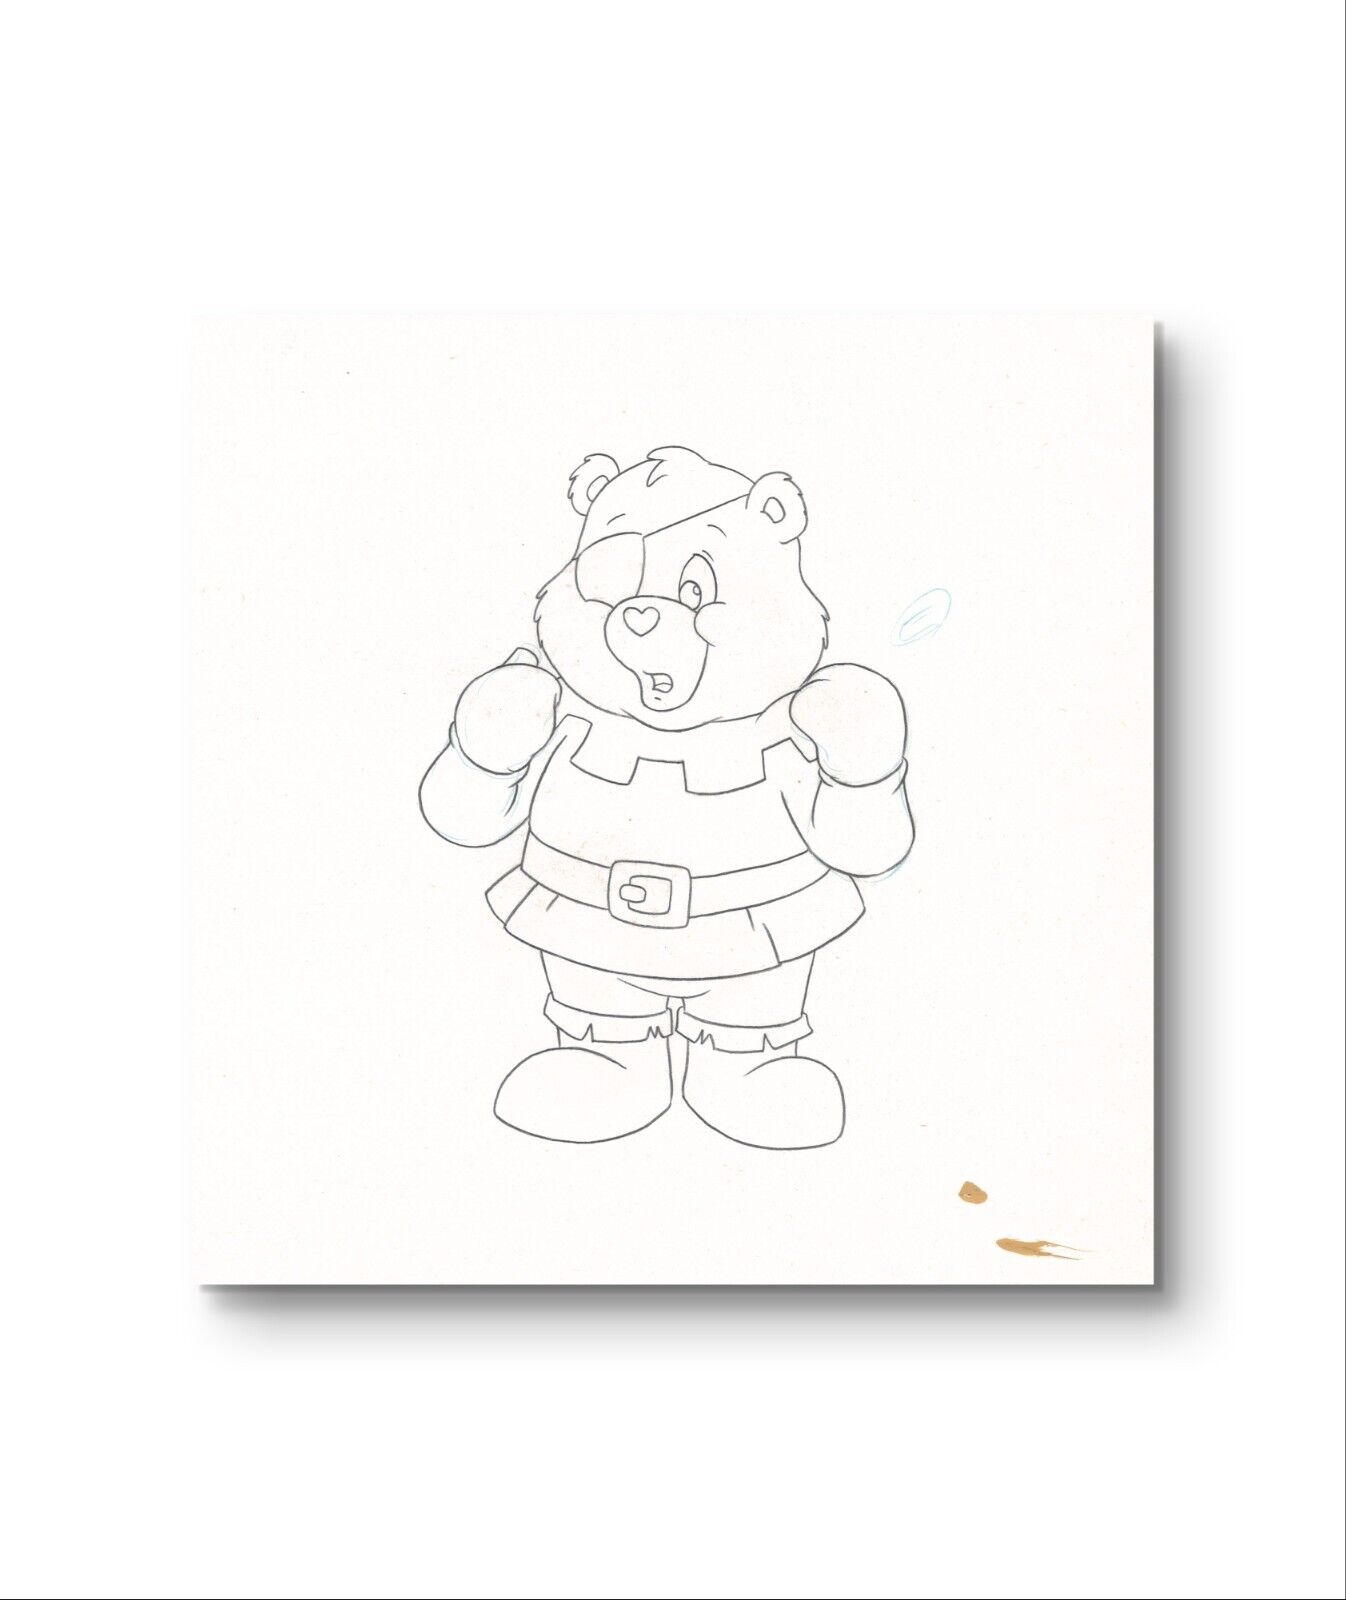 Care Bears Classic Series Animation Drawing, 1988: Grumpy Bear as Grumpore